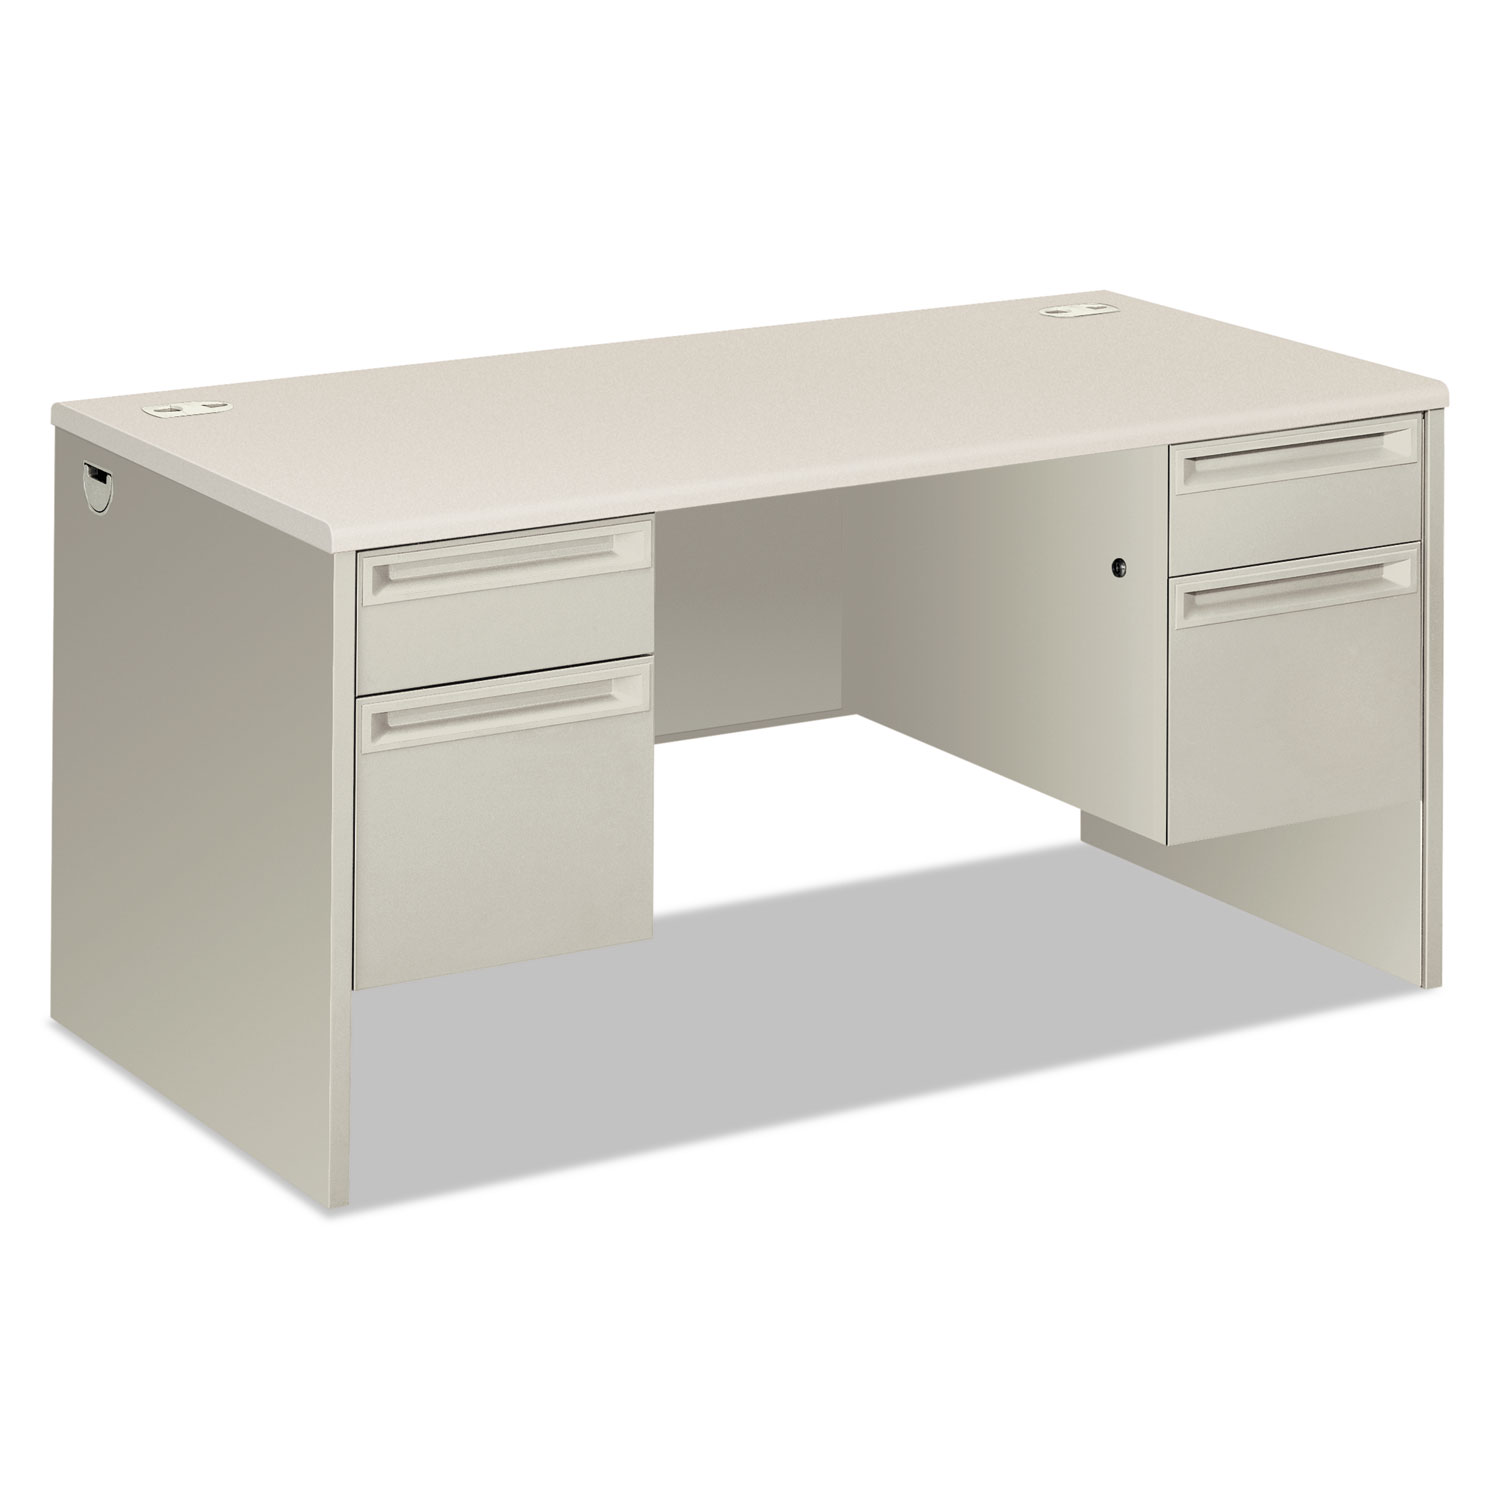  HON H38155.B9.Q 38000 Series Double Pedestal Desk, 60w x 30d x 30h, Silver Mesh/Light Gray (HON38155B9Q) 